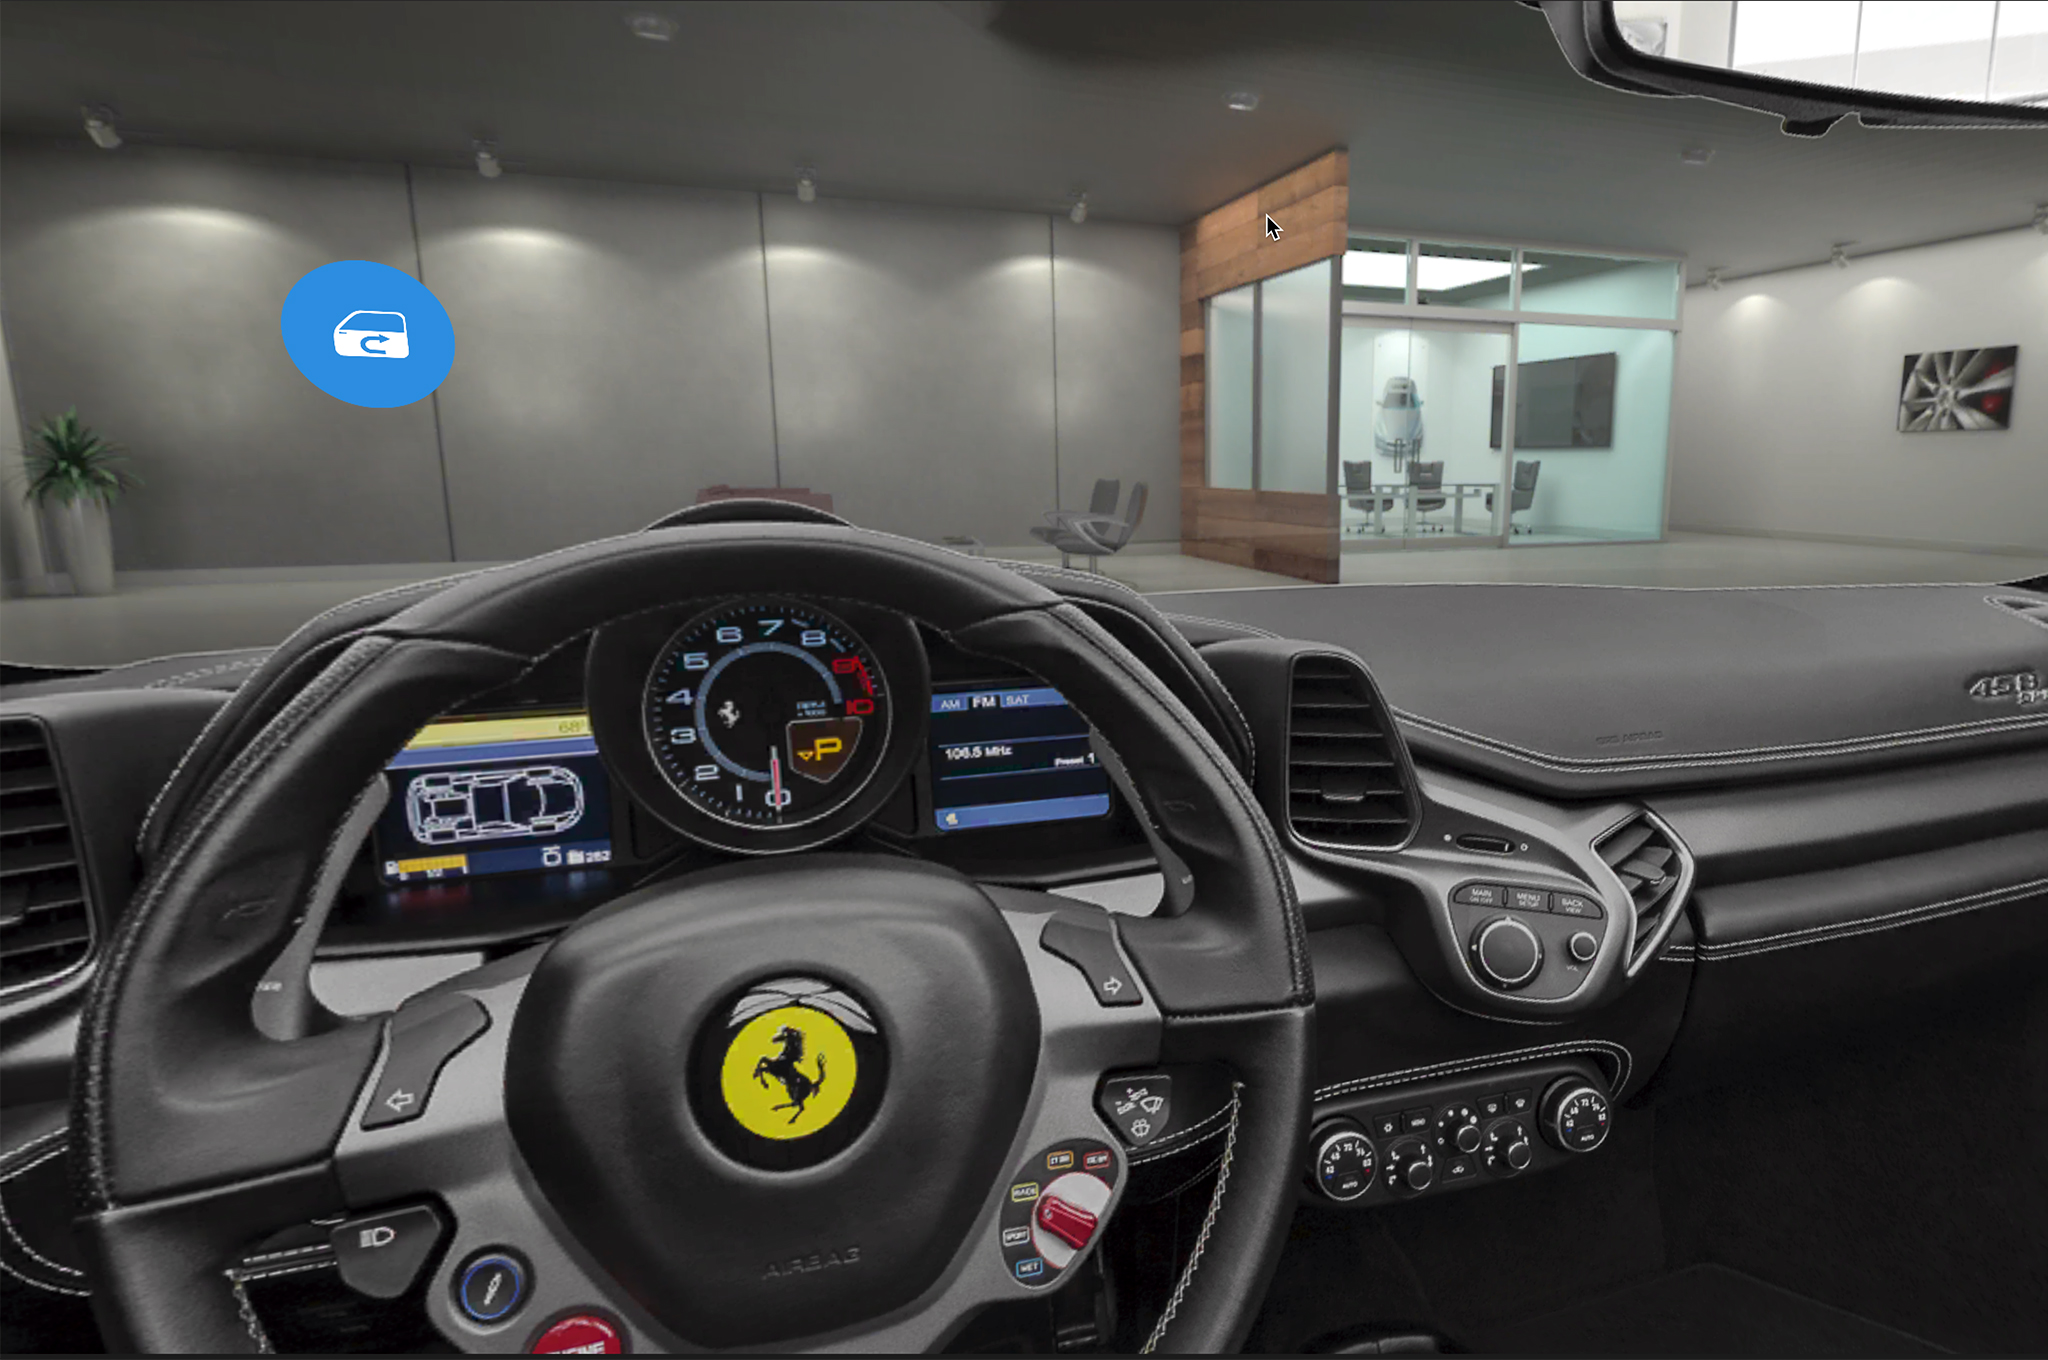 EVOX images virtual reality Ferrari front view